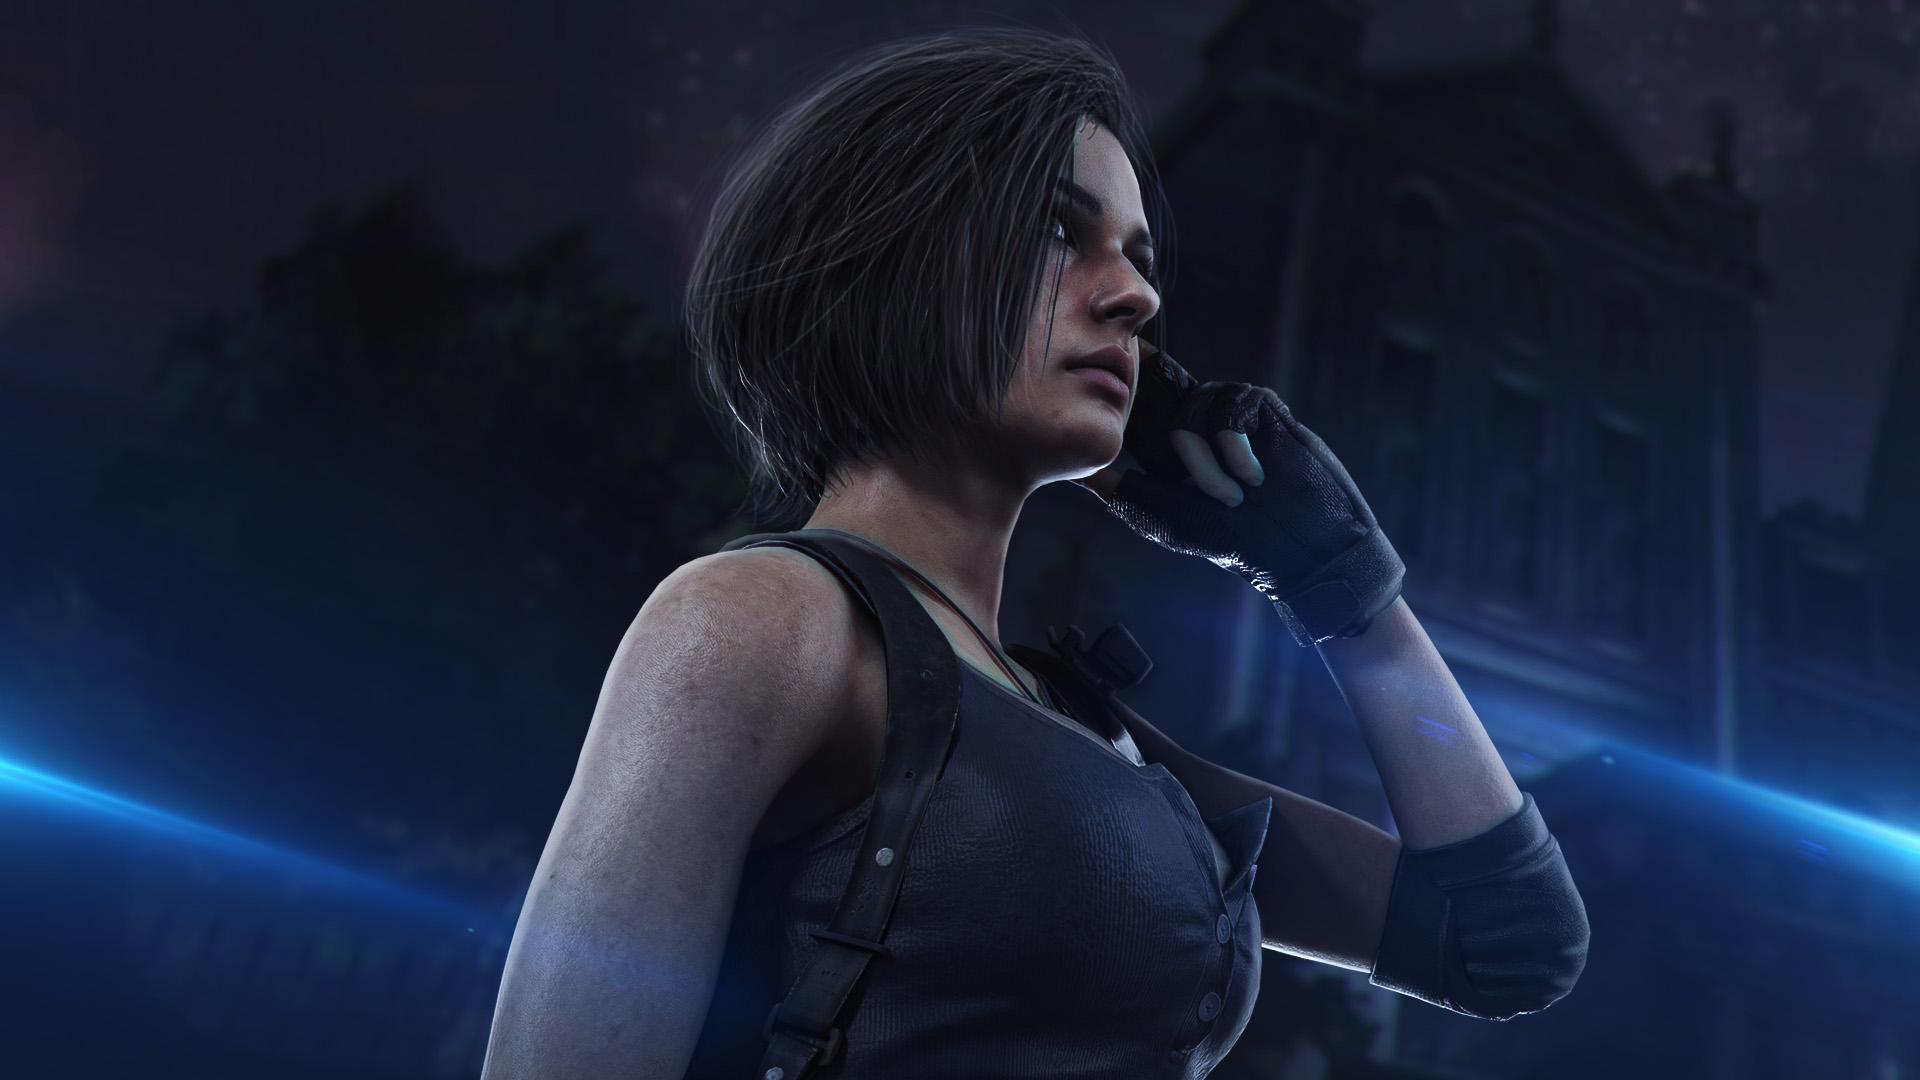 Jill Valentine - Resident Evil 3 Remake by FrankAlcantara on